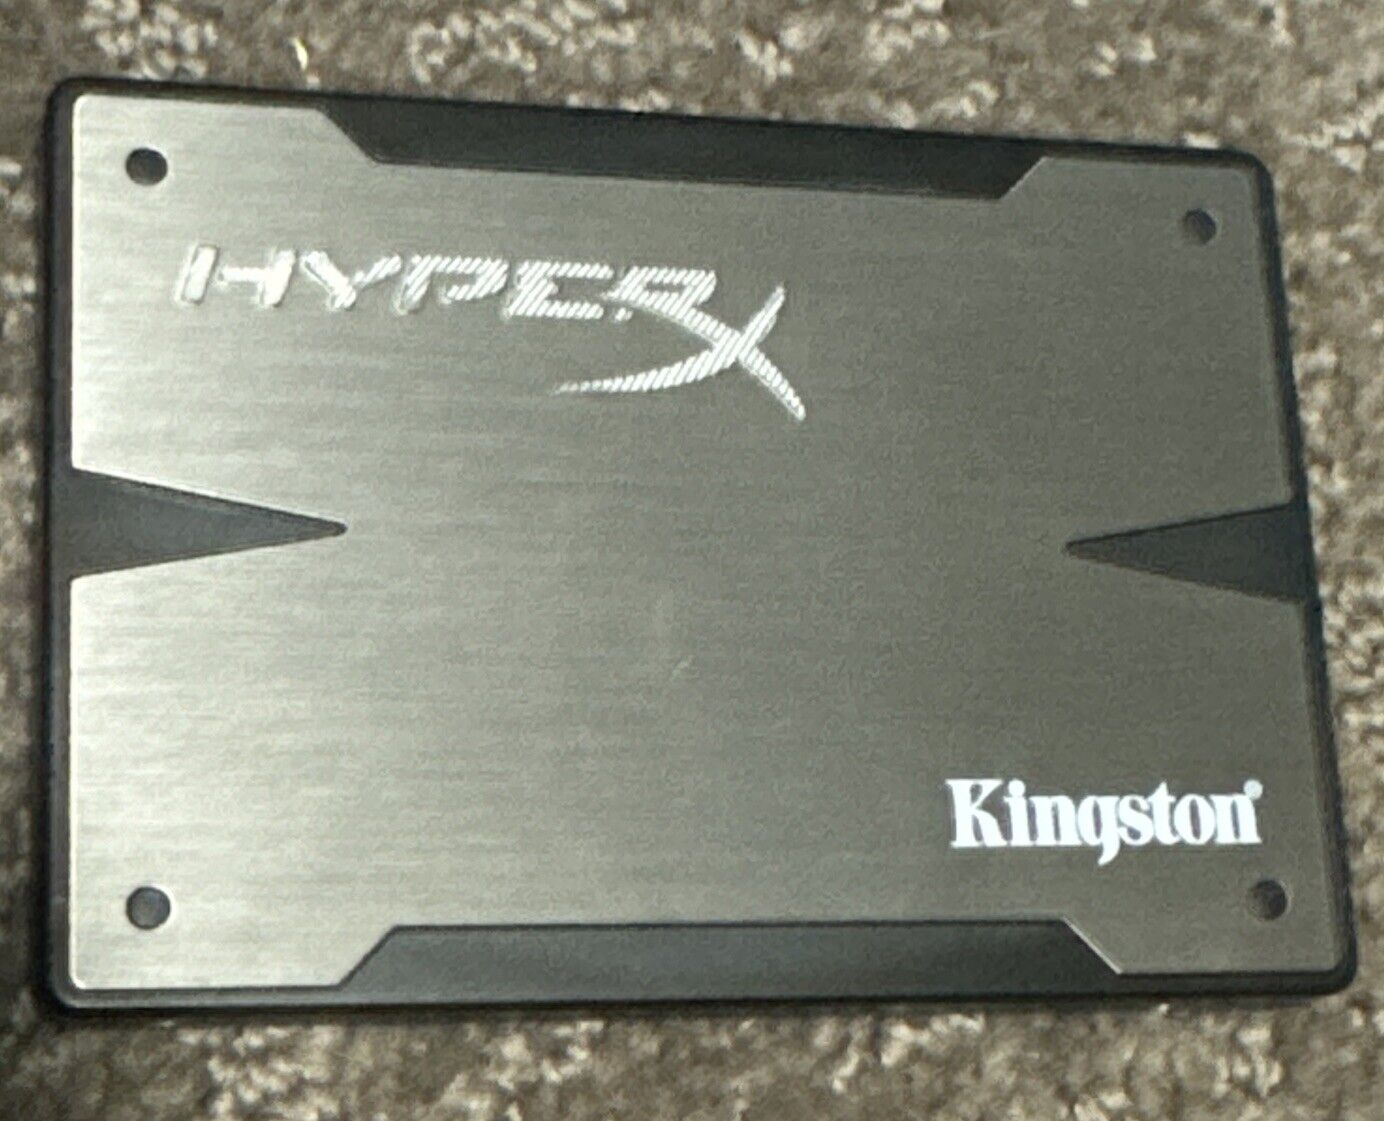 Solid State Drive SSD 120GB Kingston HyperX SH103S3/120G